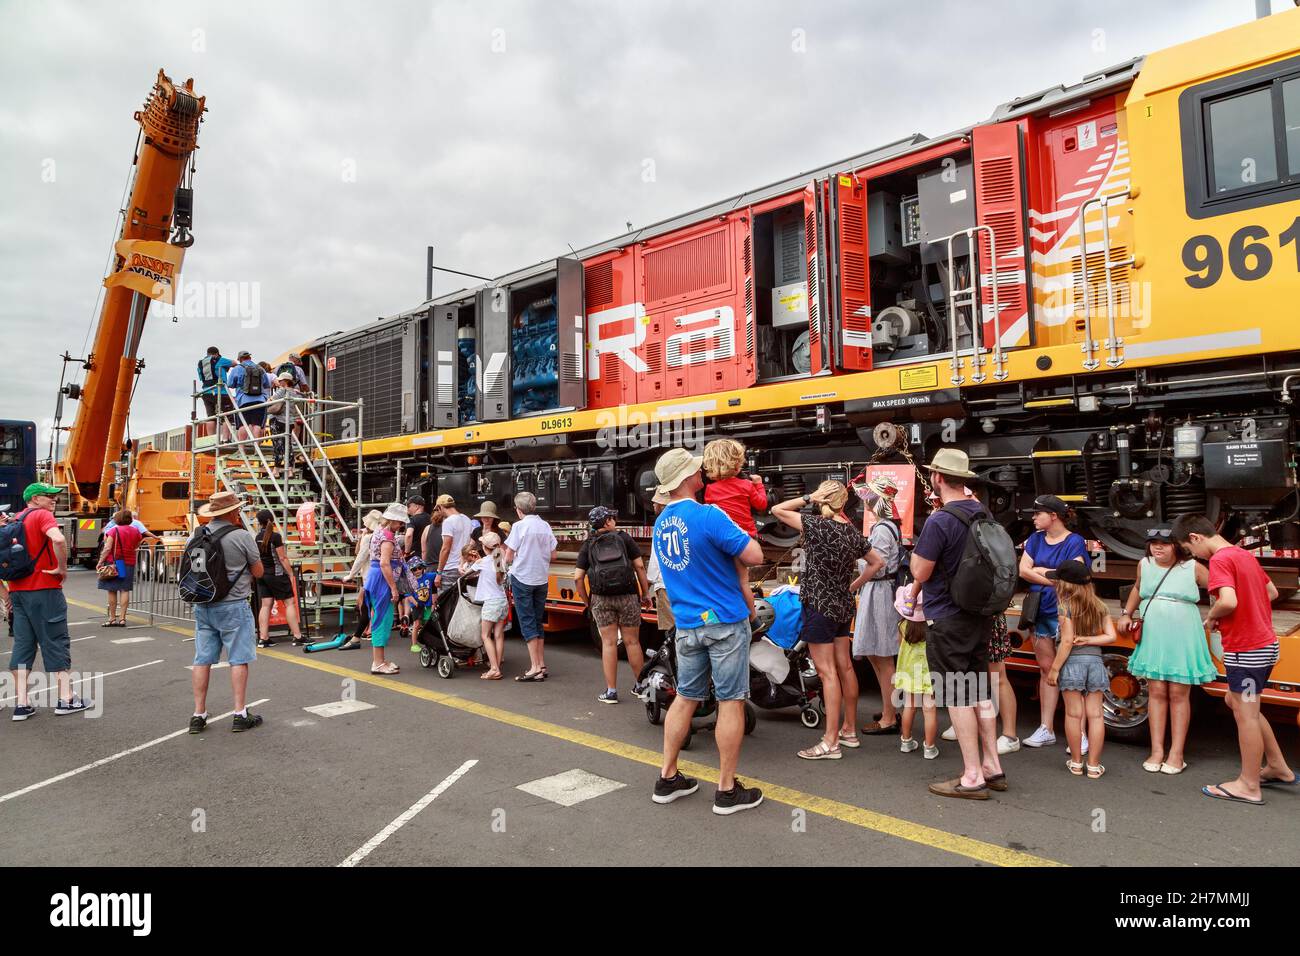 Una locomotiva diesel-elettrica di classe DL gestita da KiwiRail in mostra pubblica ad Auckland, Nuova Zelanda Foto Stock